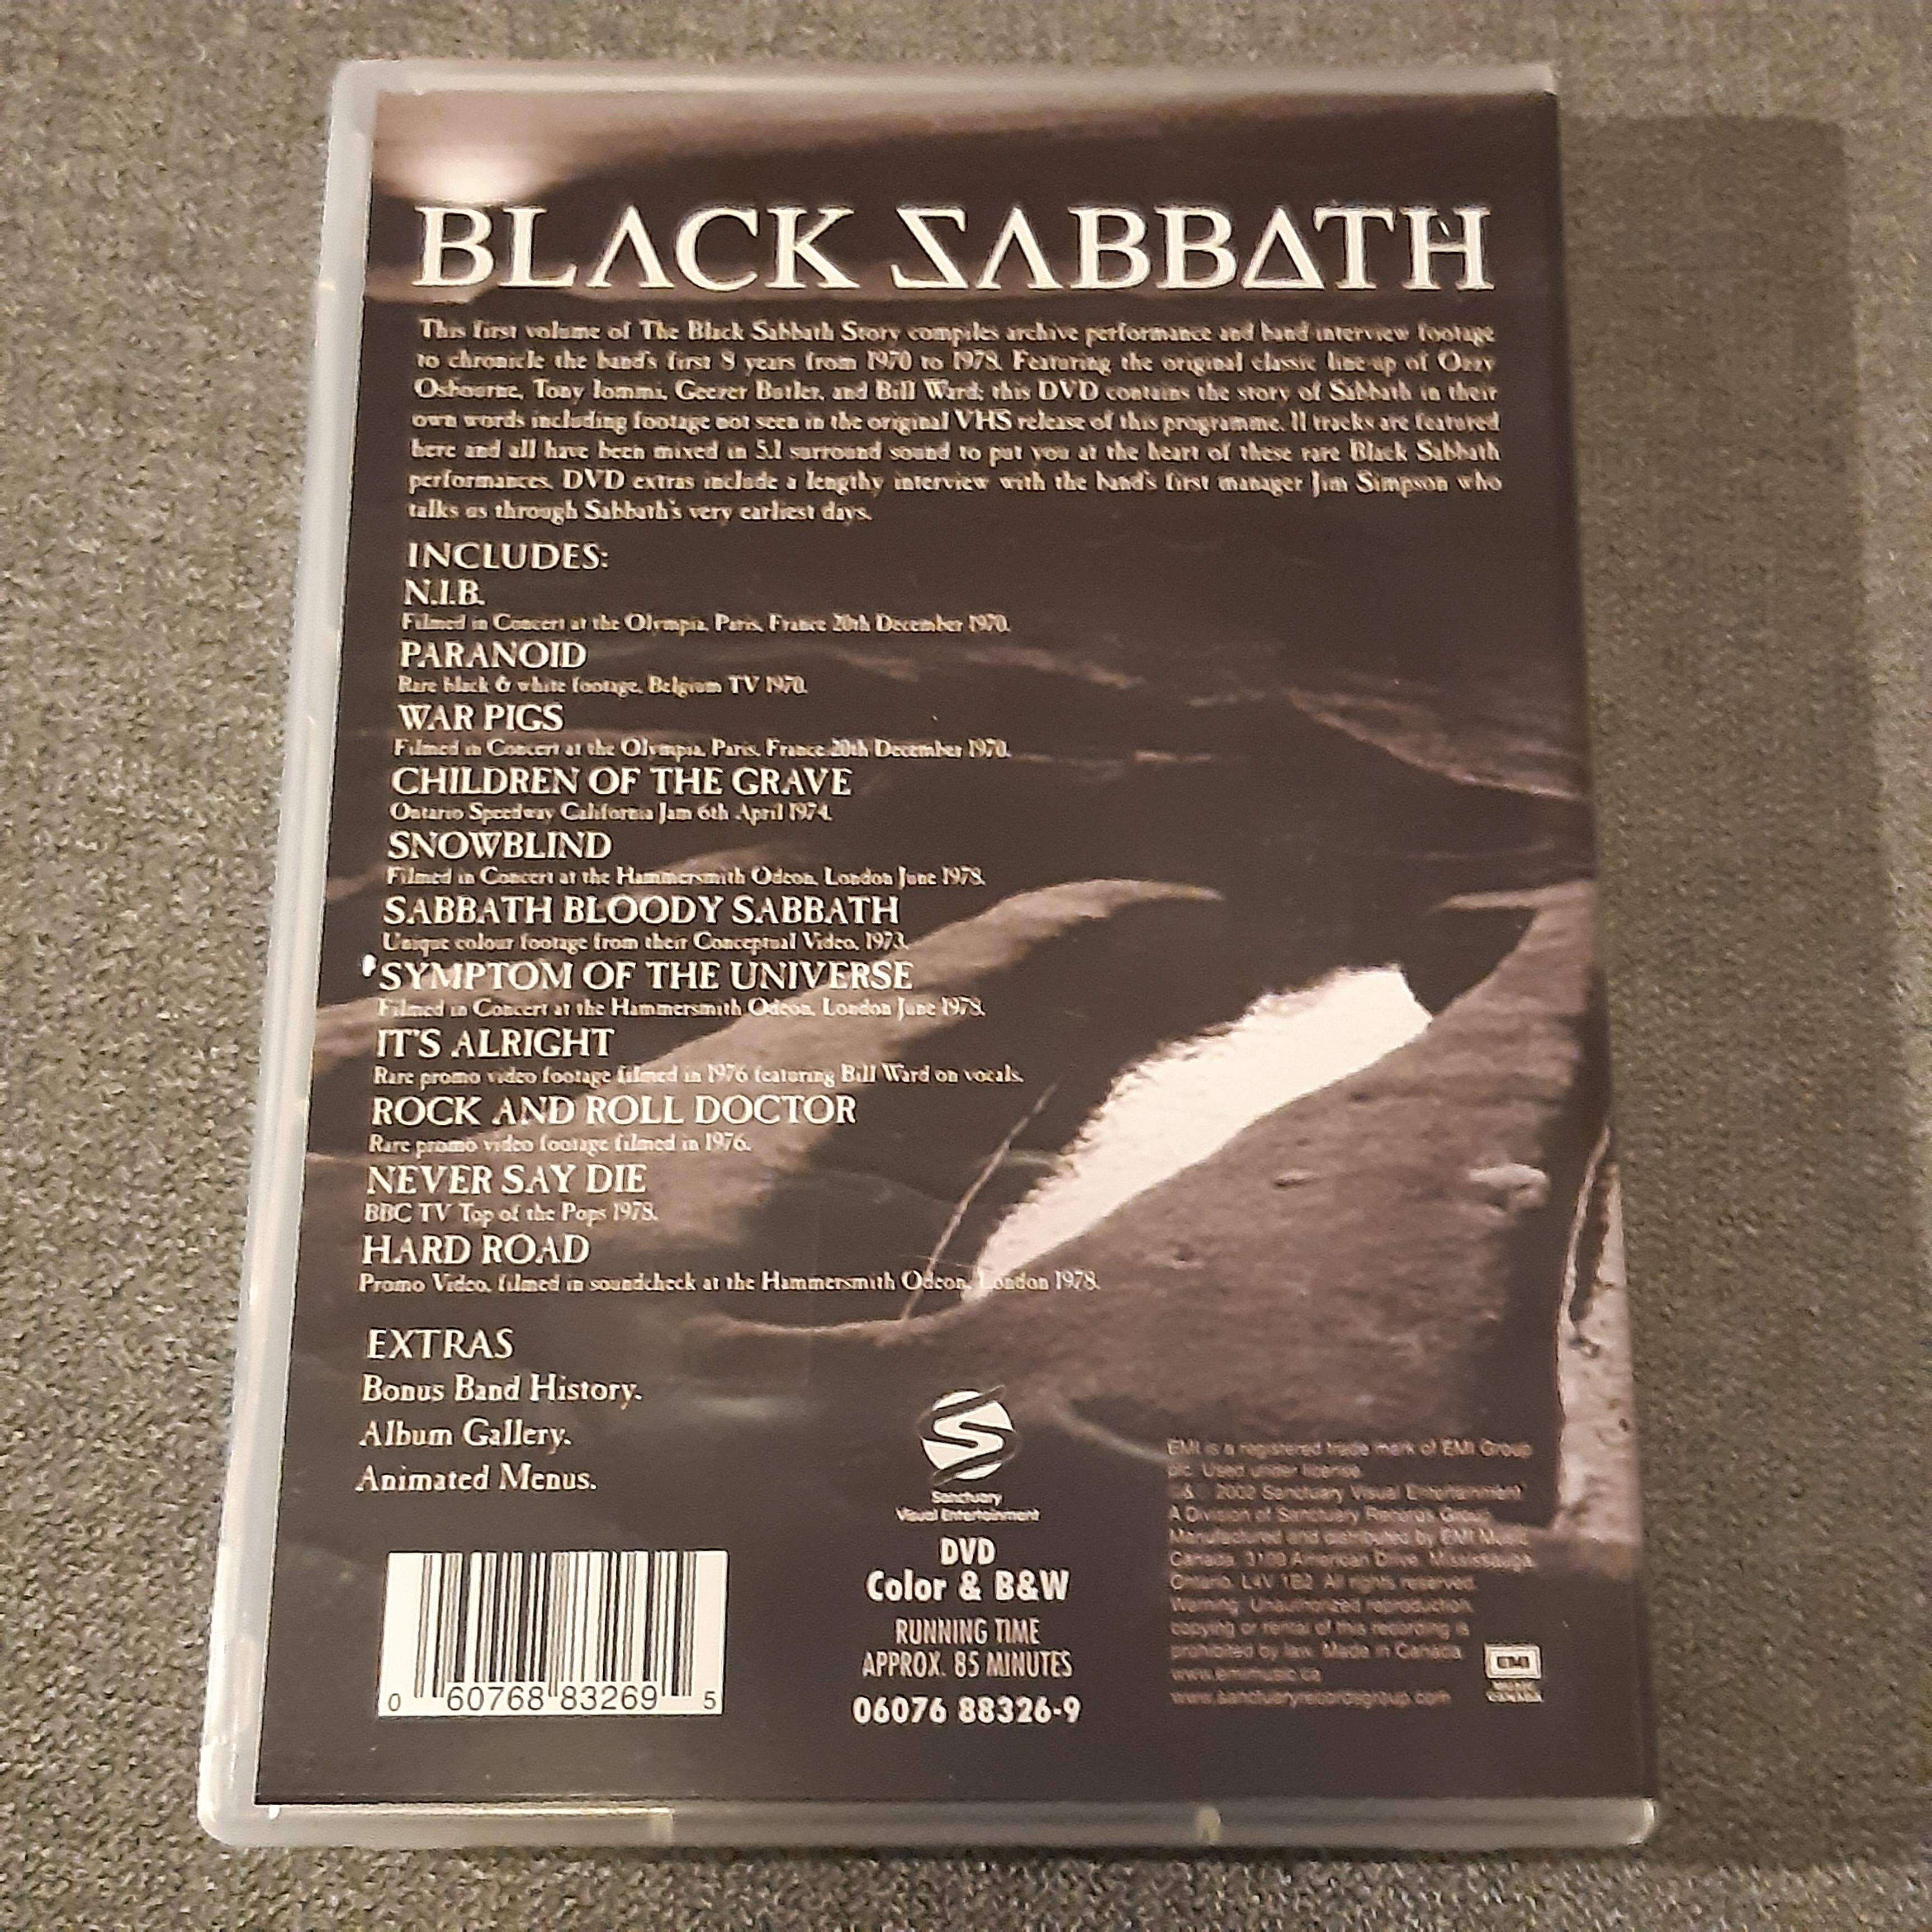 Black Sabbath - The Black Sabbath Story Volume One - DVD (käytetty)